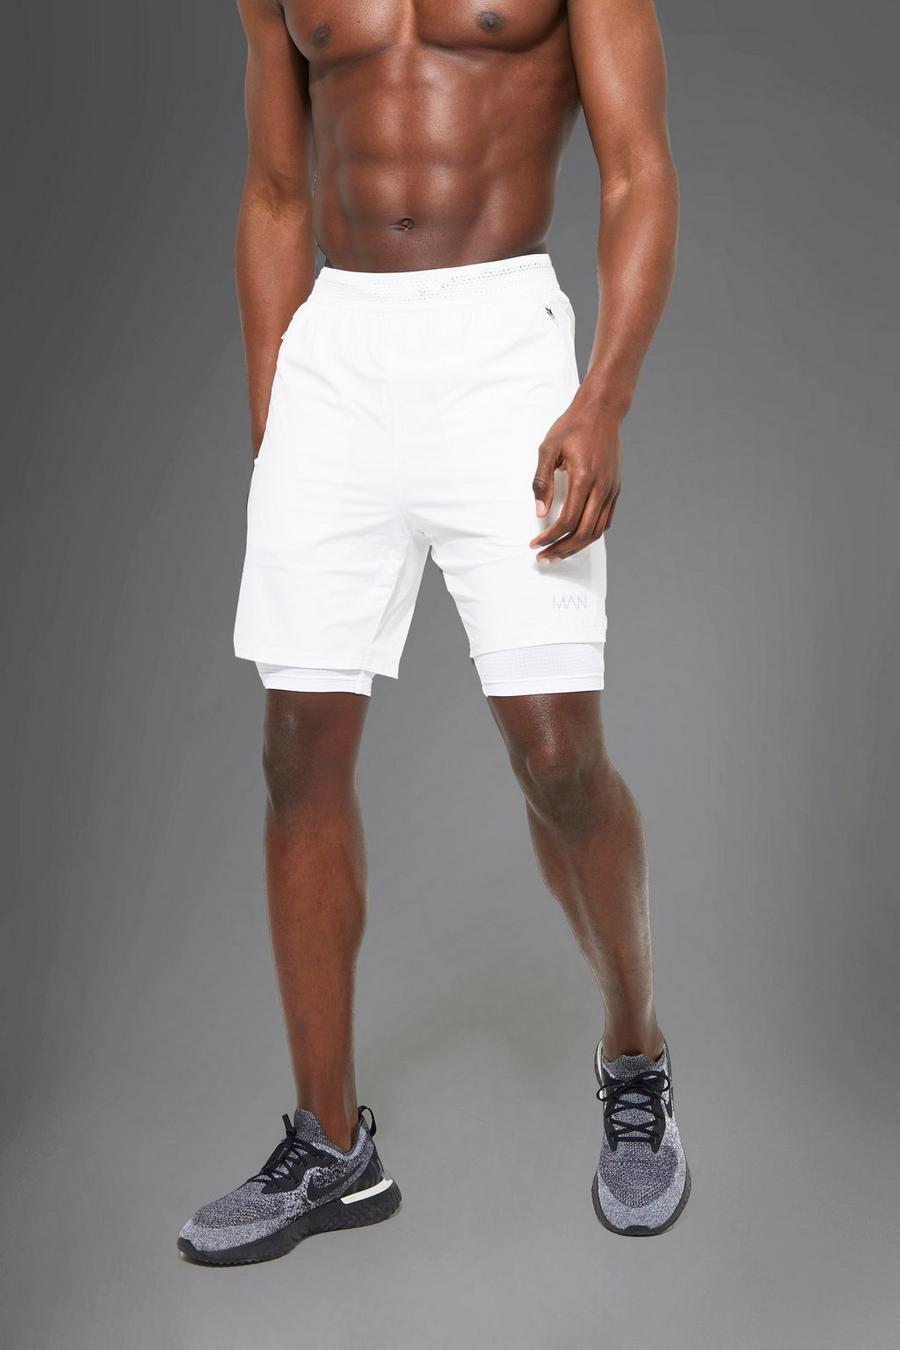 Pantalón corto MAN Active 2 en 1, White bianco